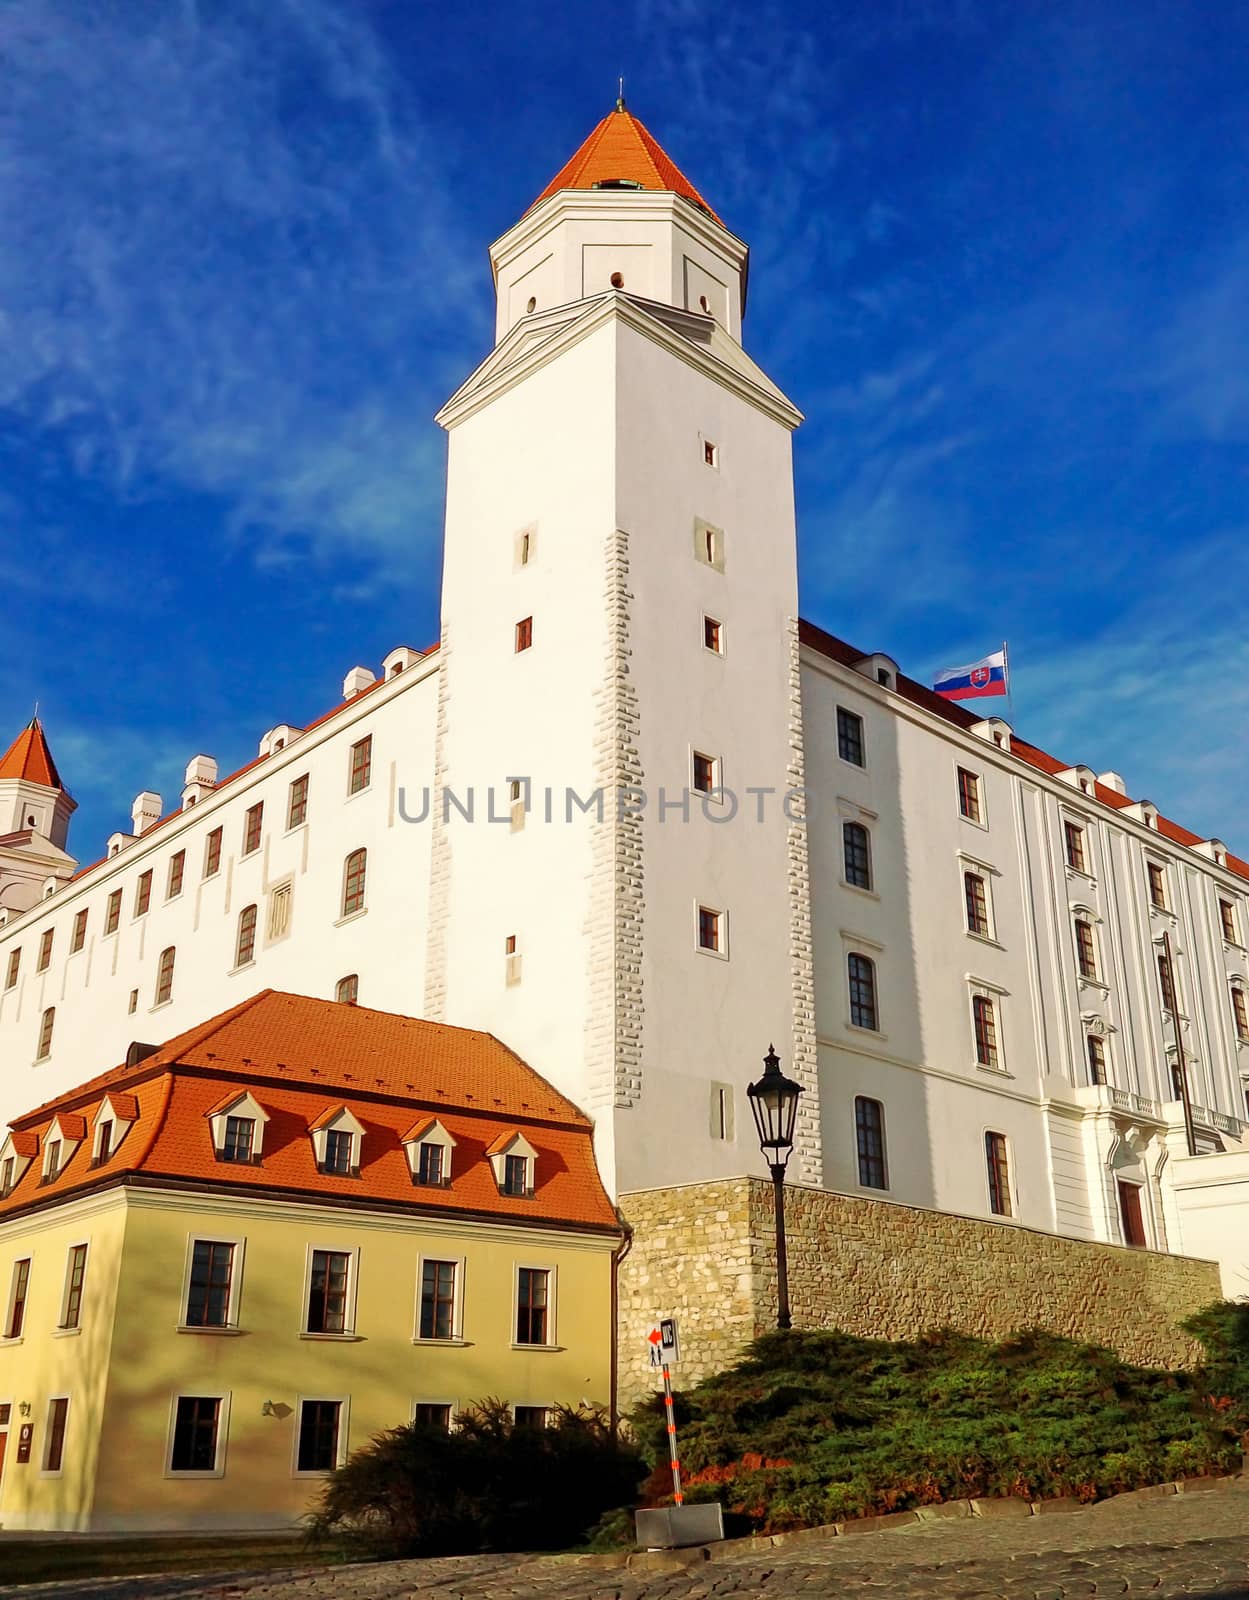 Bratislava castle against a blue sky by orsor